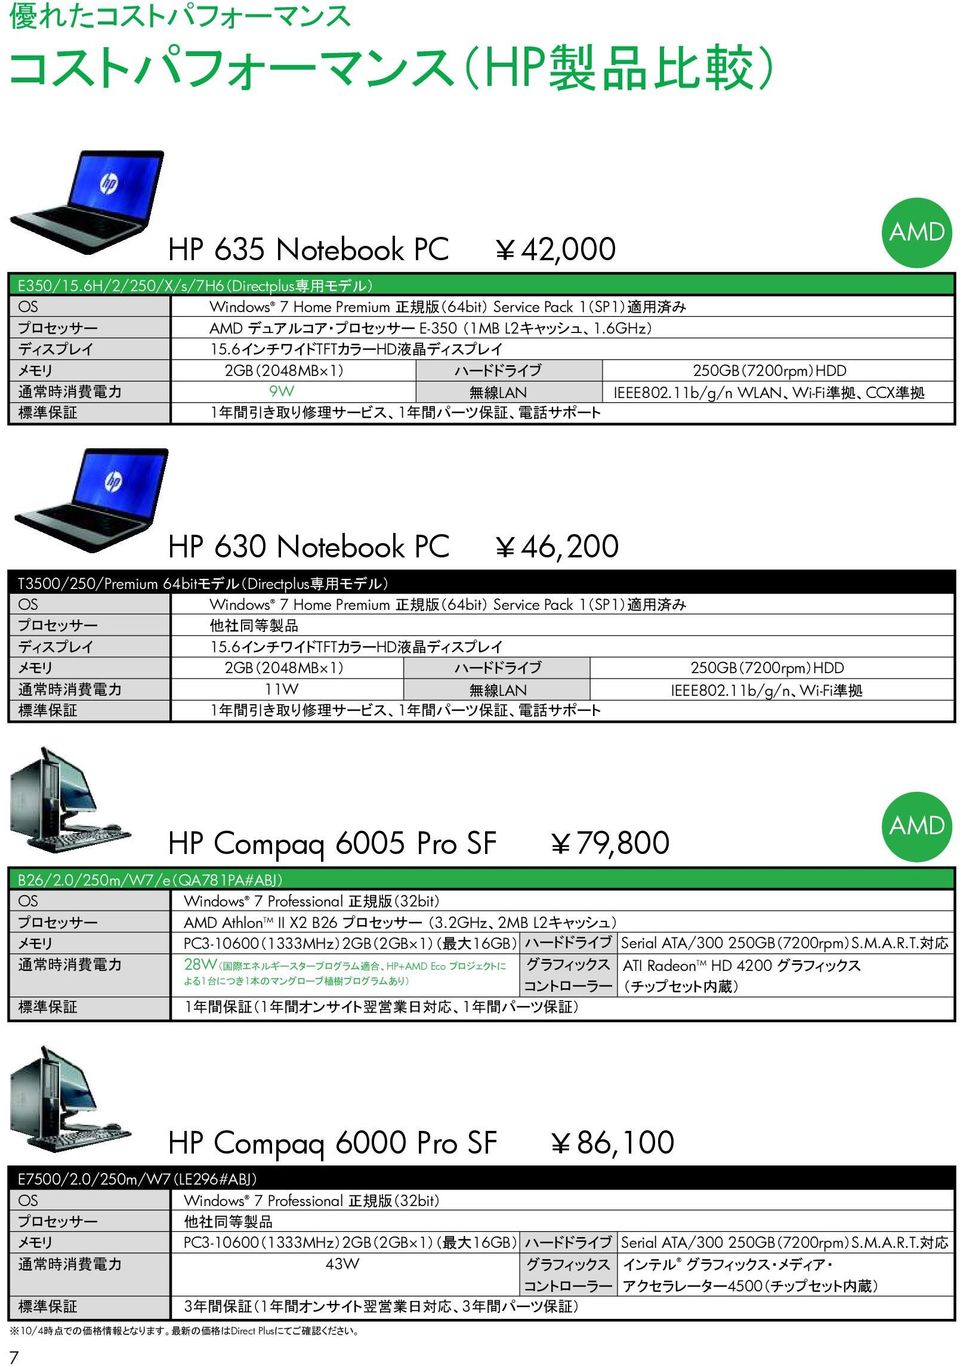 11b/g/n Wi-Fi 1 1 HP Compaq 6005 Pro SF 1 1 1 1 1 79,800 B26/2.0/250m/W7/e QA781PA#ABJ OS Windows 7 Professional 32bit AMD Athlon TM II X2 B26 3.